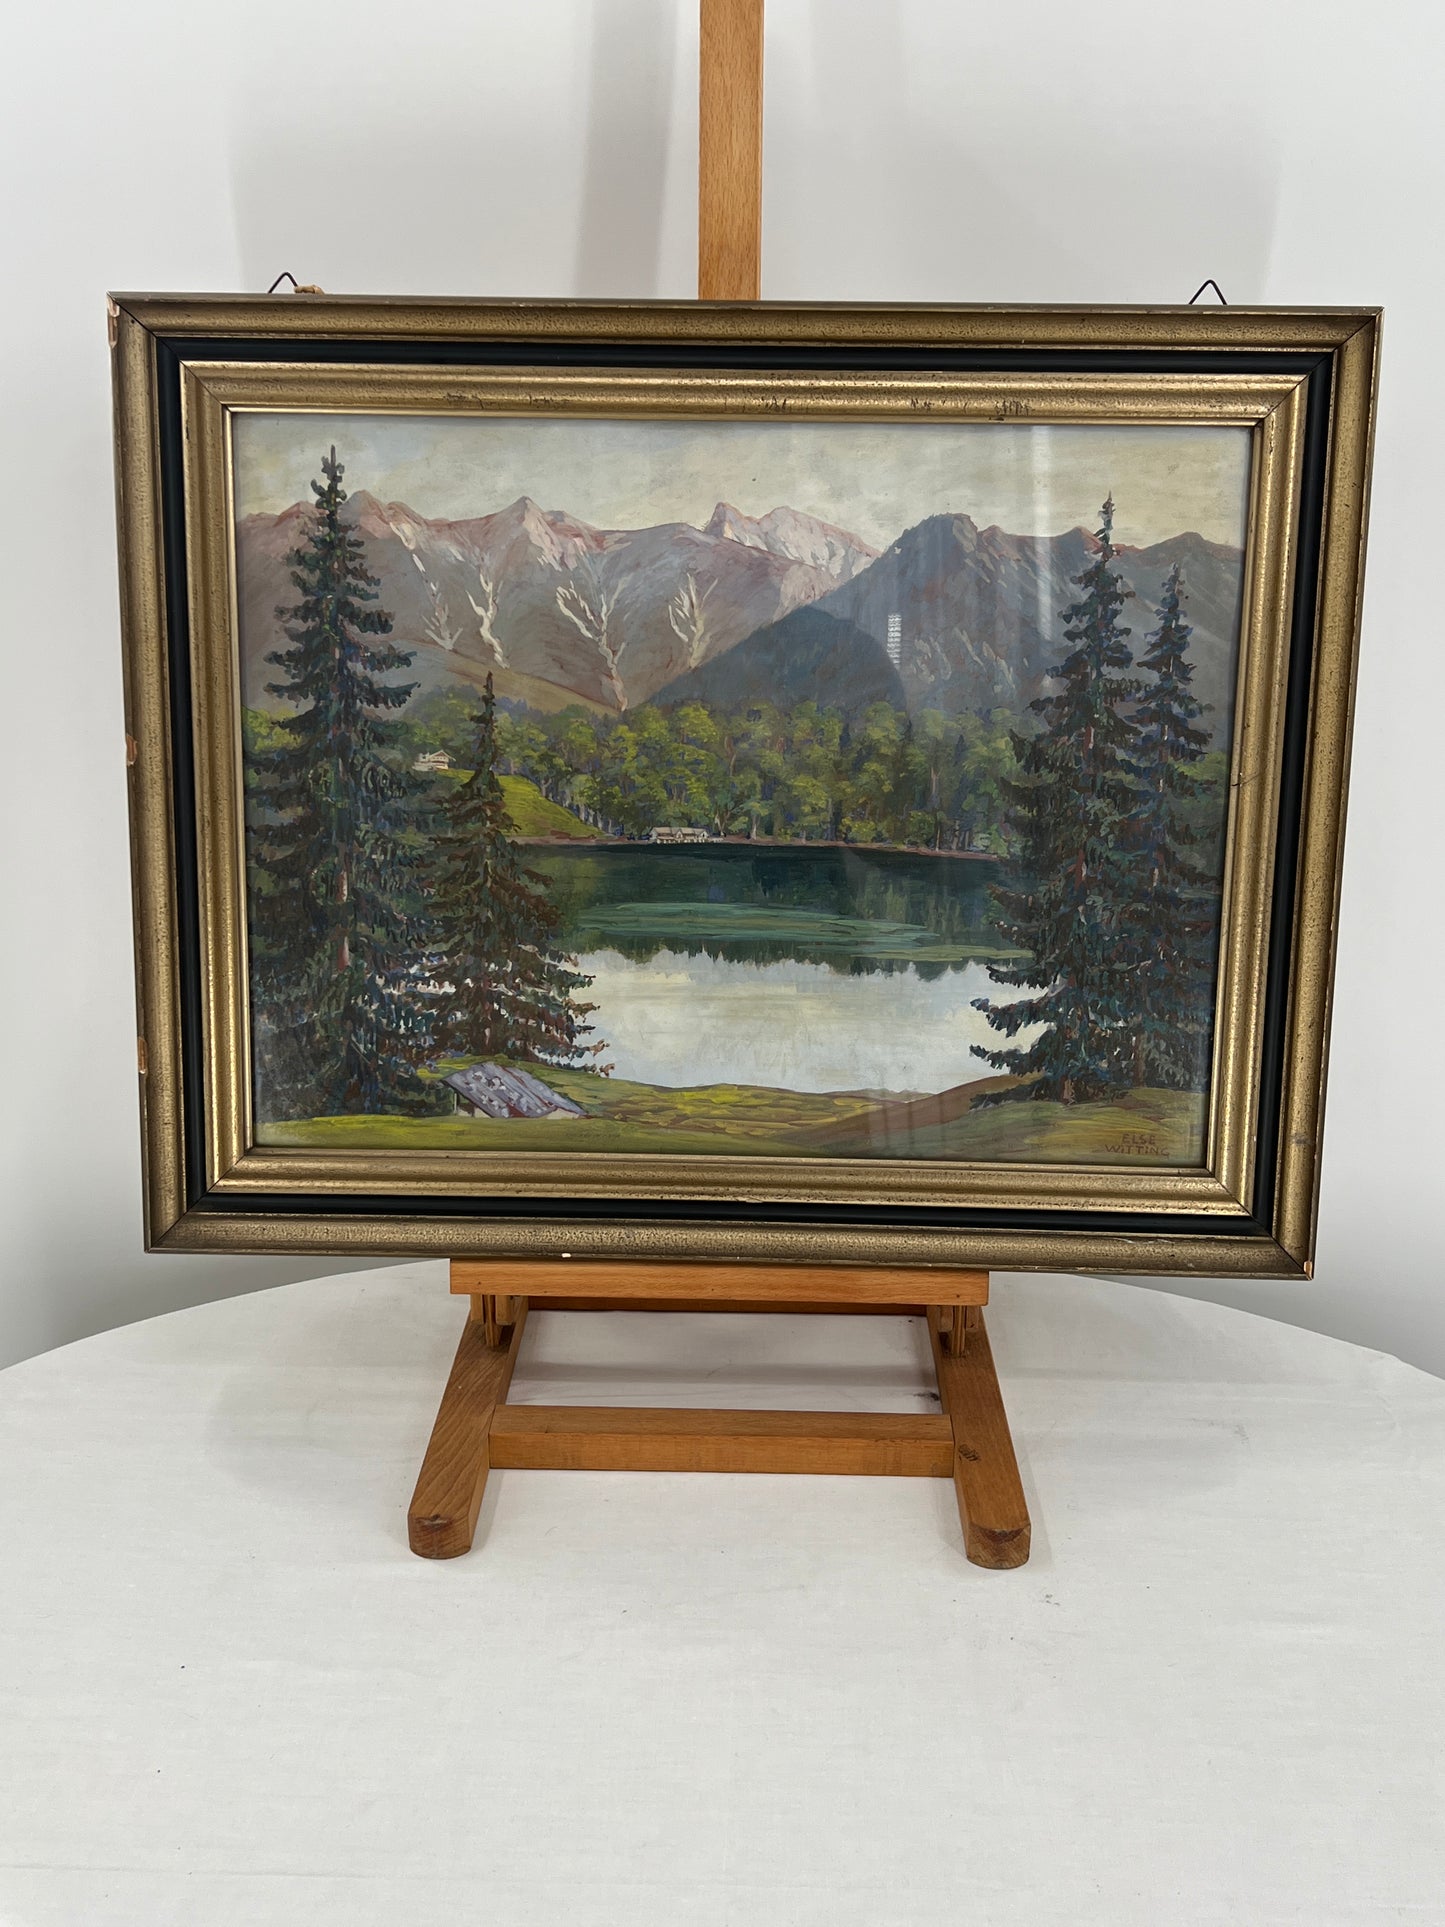 Gemälde "Berglandschaft" von Else Witting 65x52cm